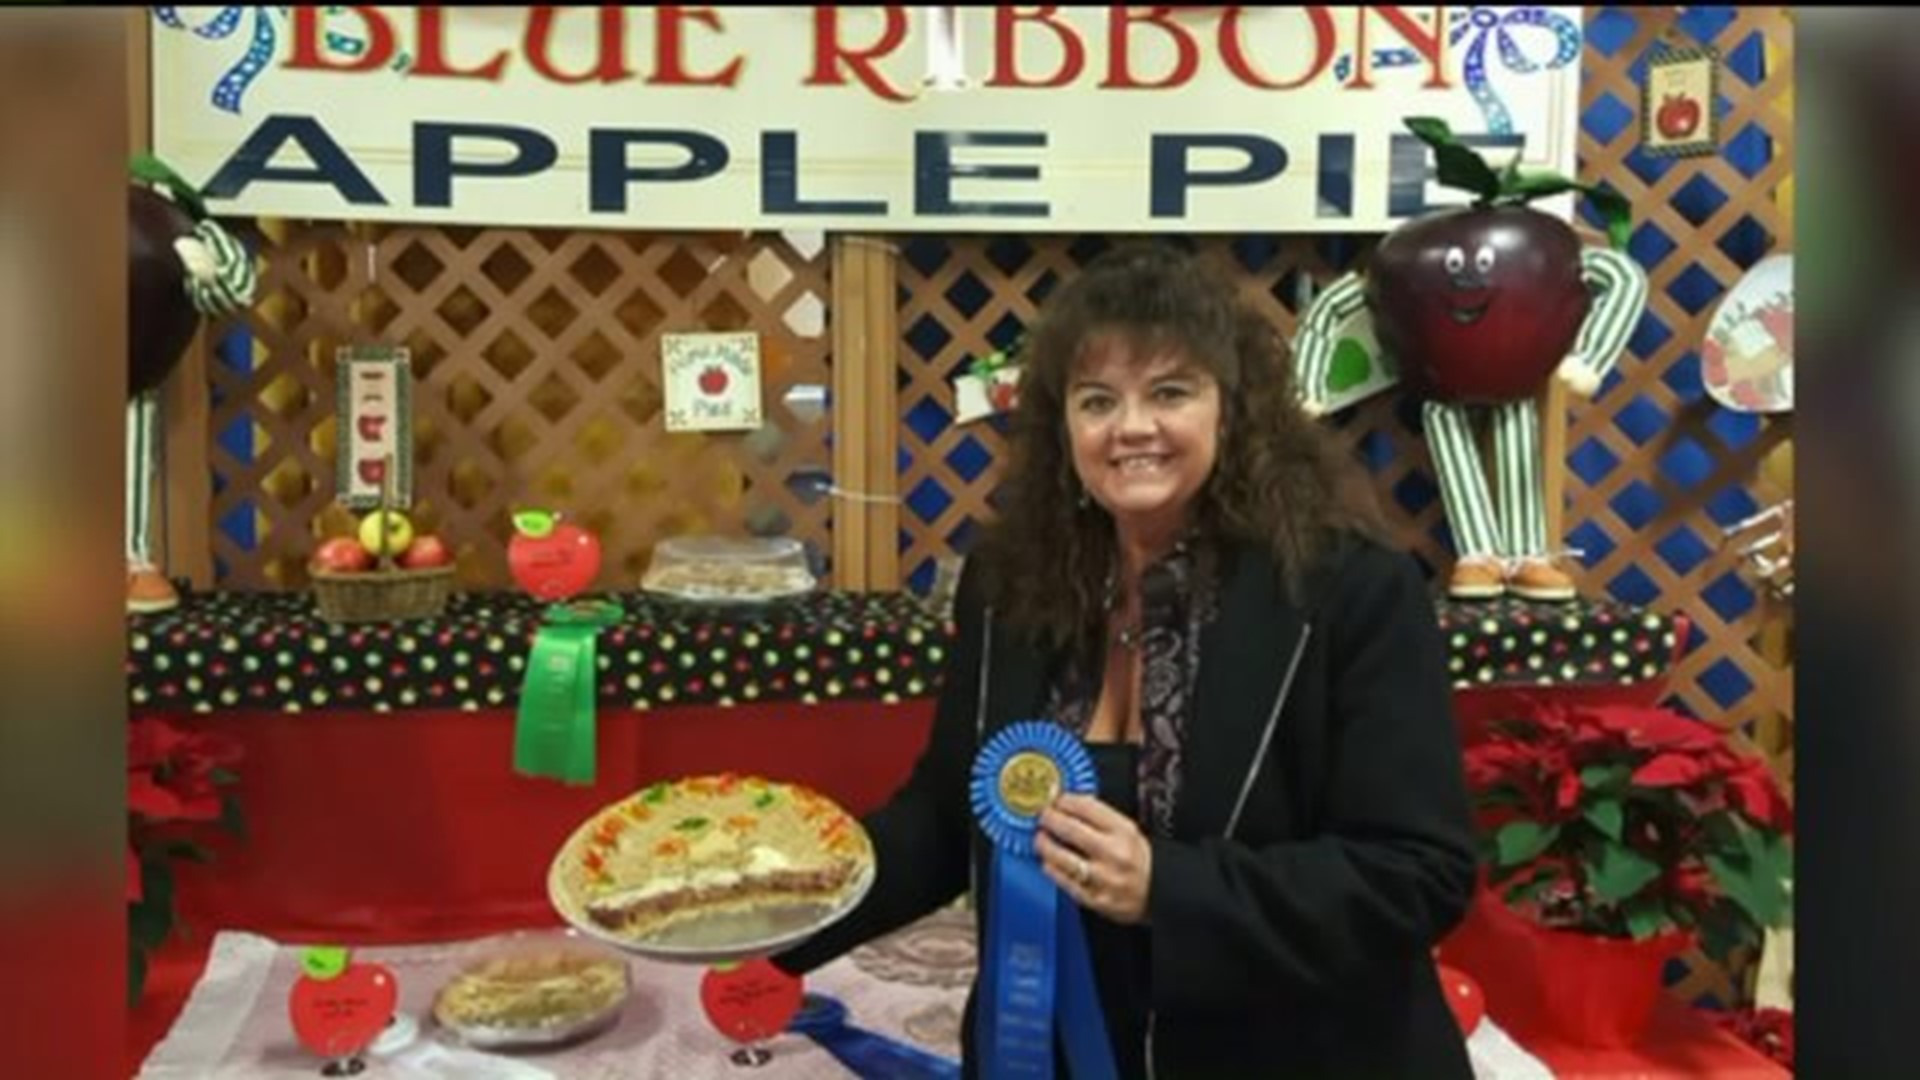 Apple Pie Takes Home Blue Ribbon at Farm Show